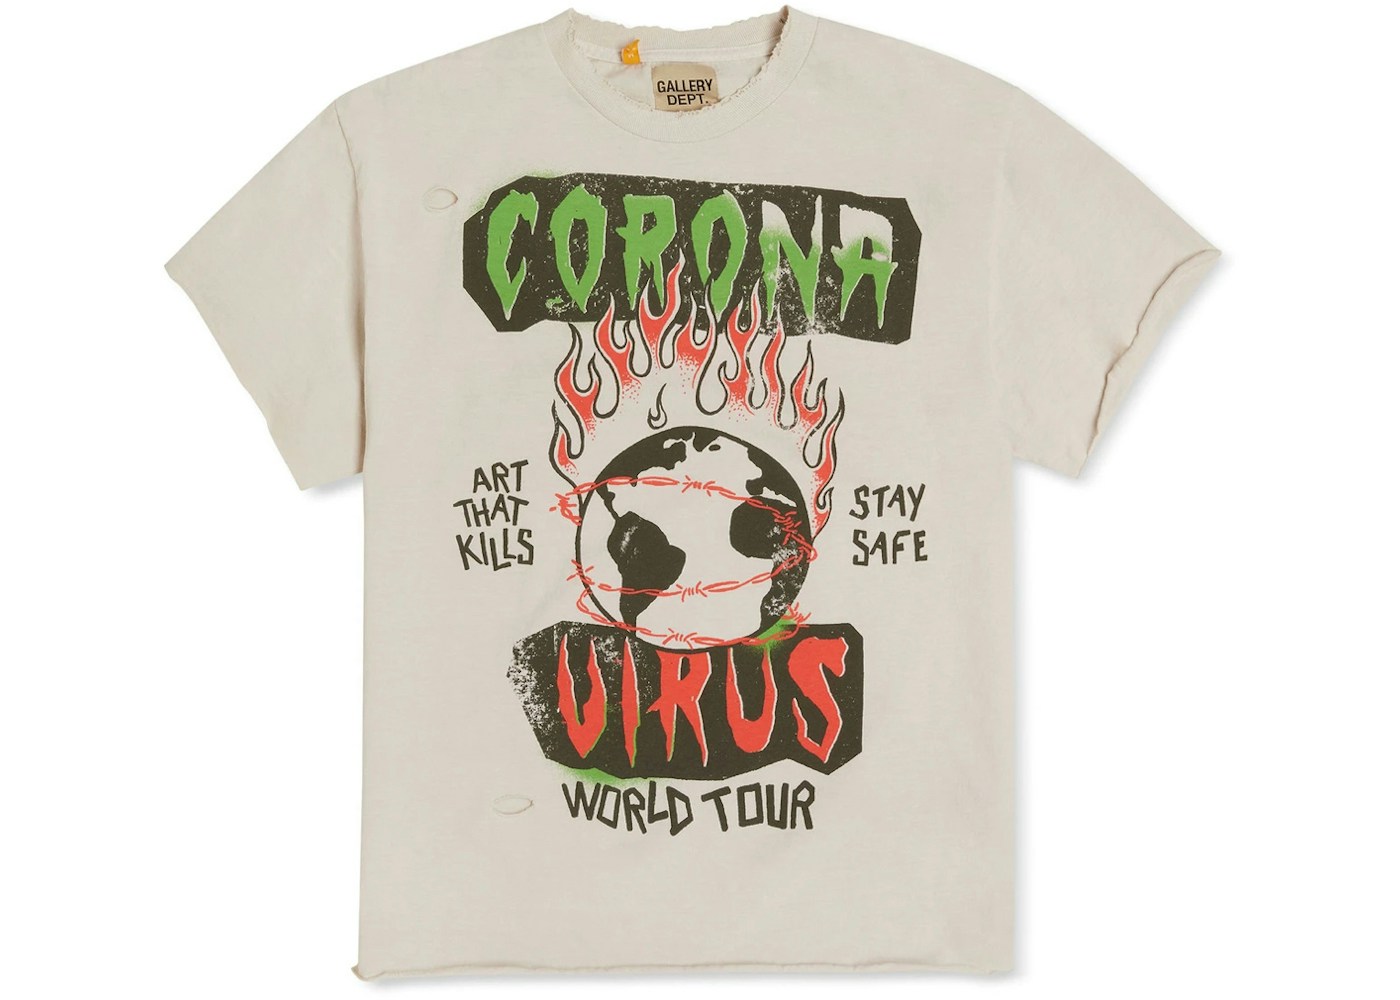 coronavirus world tour gallery dept